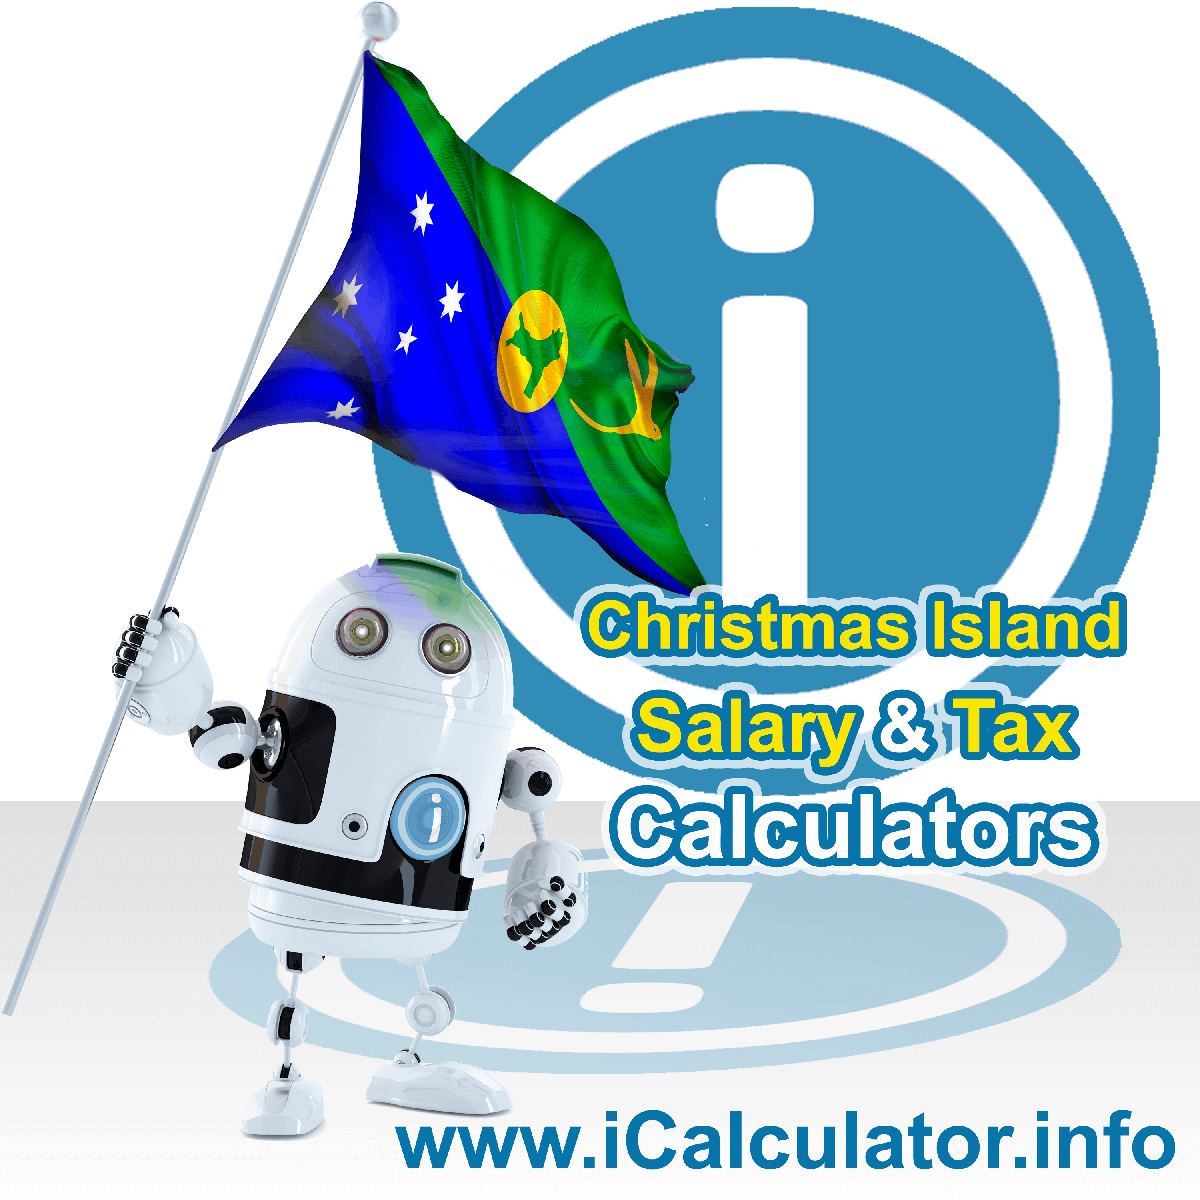 Christmas Island Tax Calculator. This image shows the Christmas Island flag and information relating to the tax formula for the Christmas Island Salary Calculator